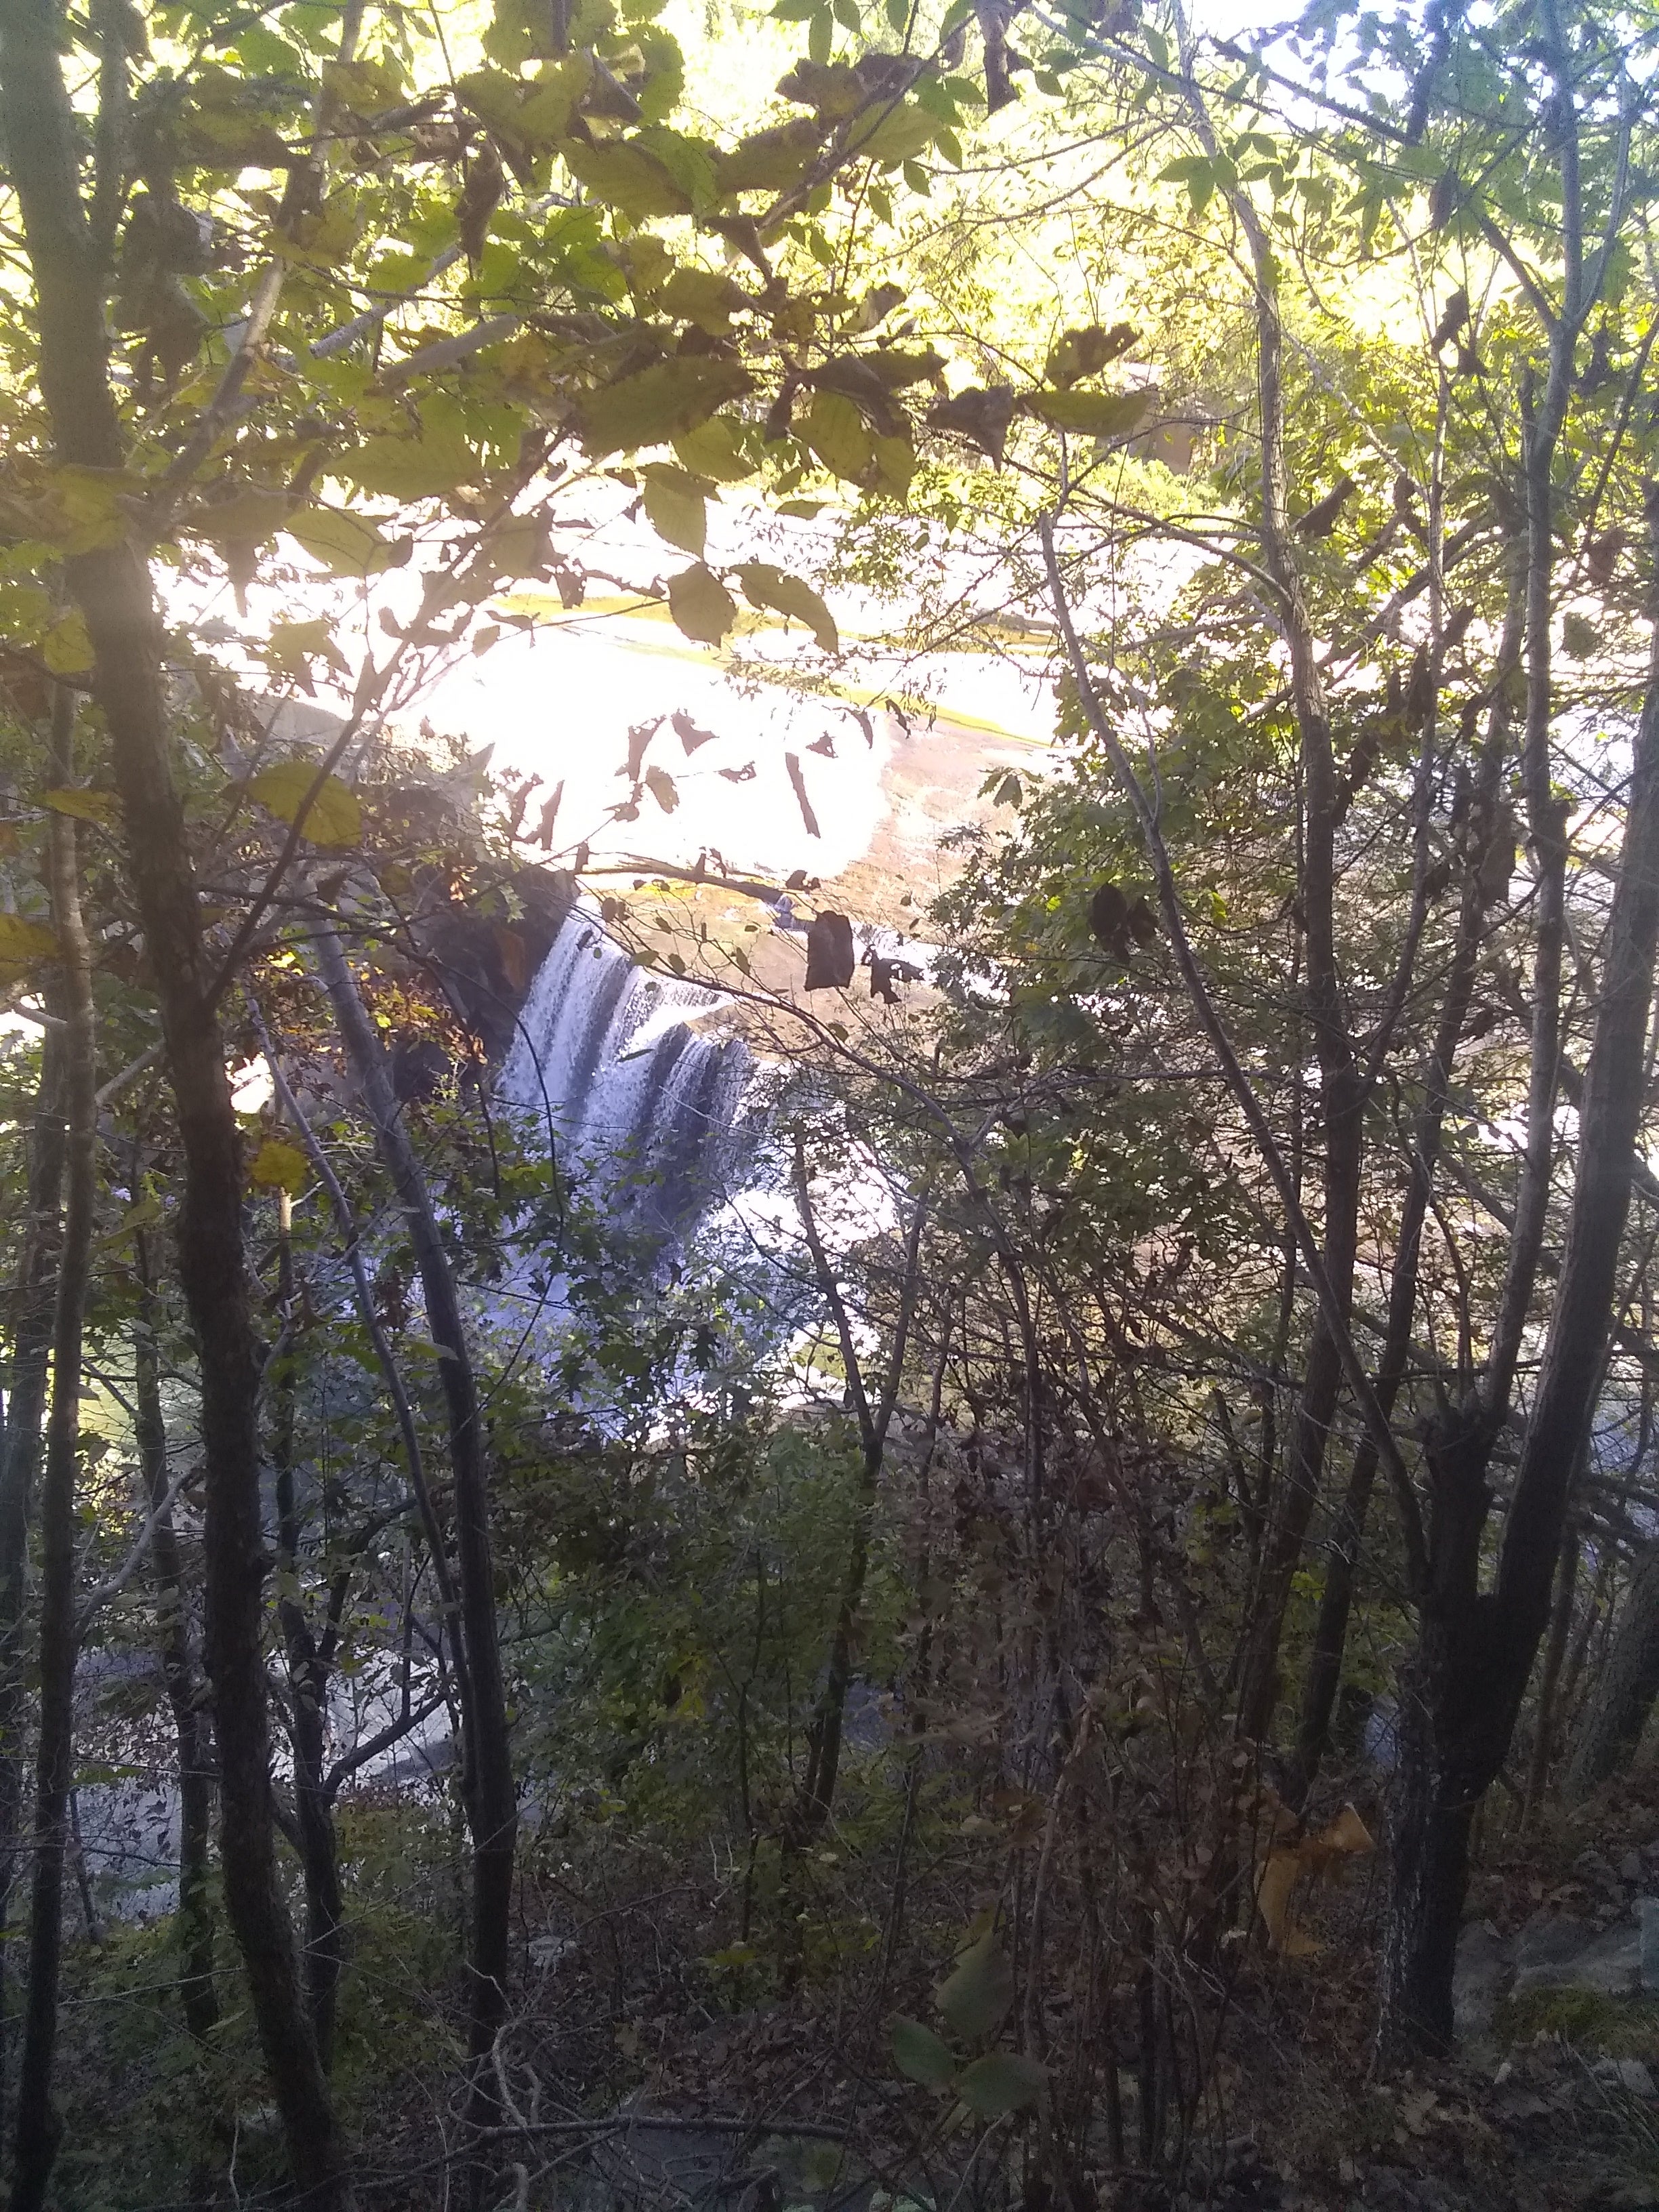 Cumberland falls